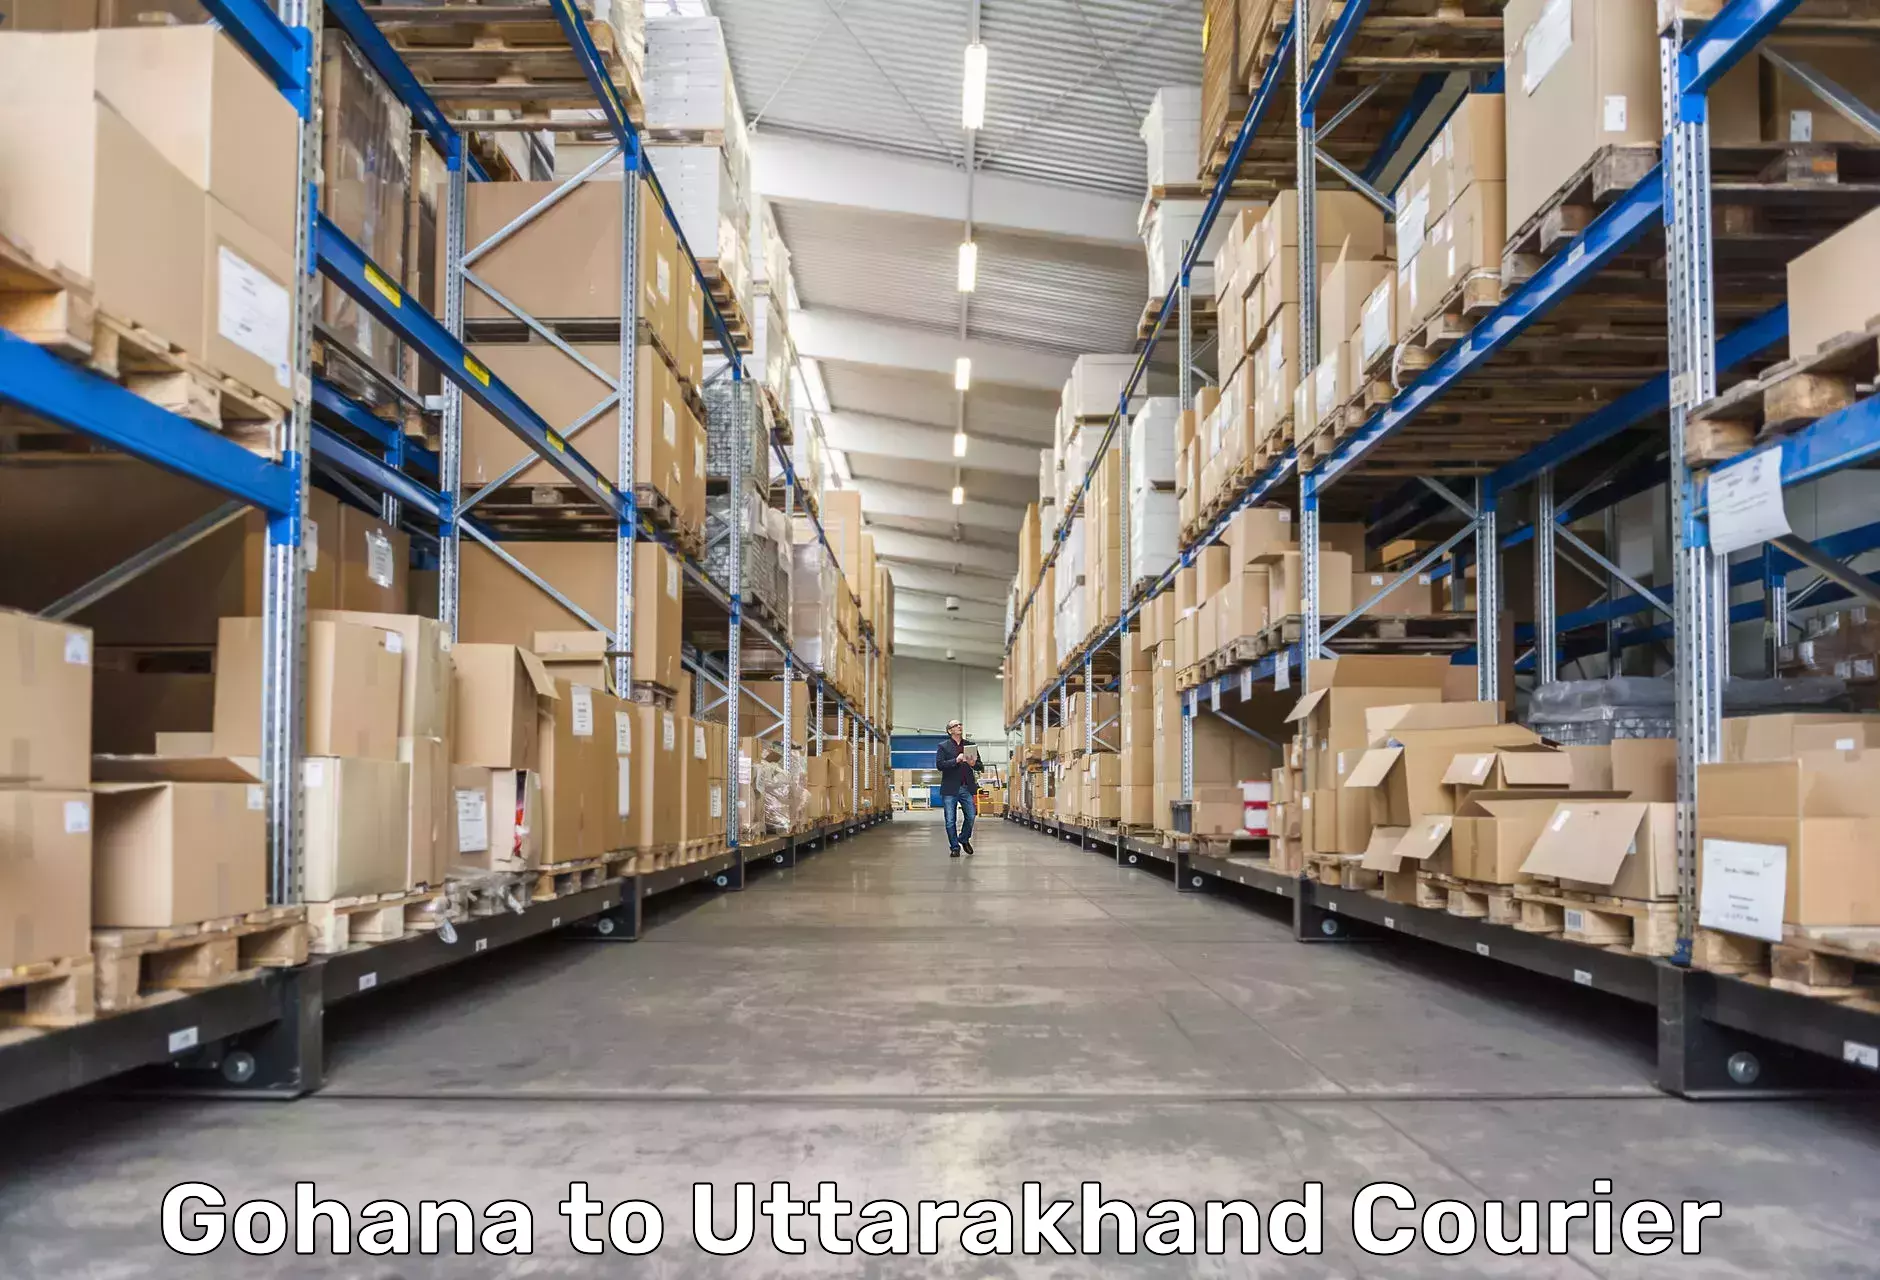 24-hour courier service Gohana to Rishikesh